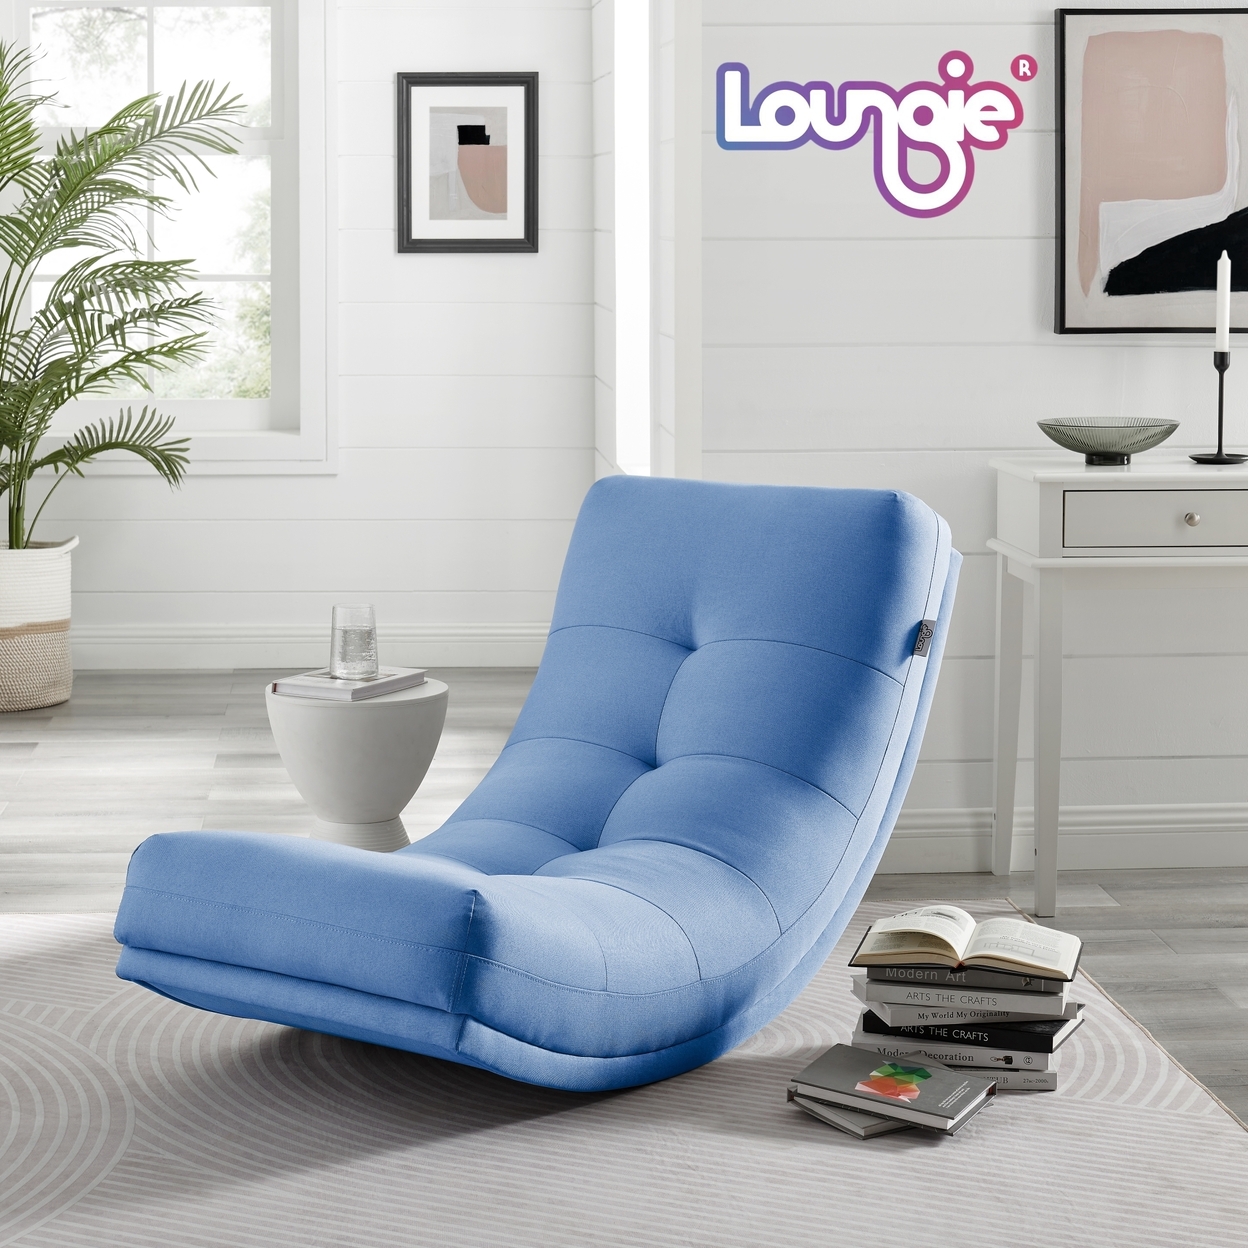 Kaniya Chair - Linen Upholstery, Tufted, Gentle Rocking Design, Ergonomic Shape And Padded Seat - Blue